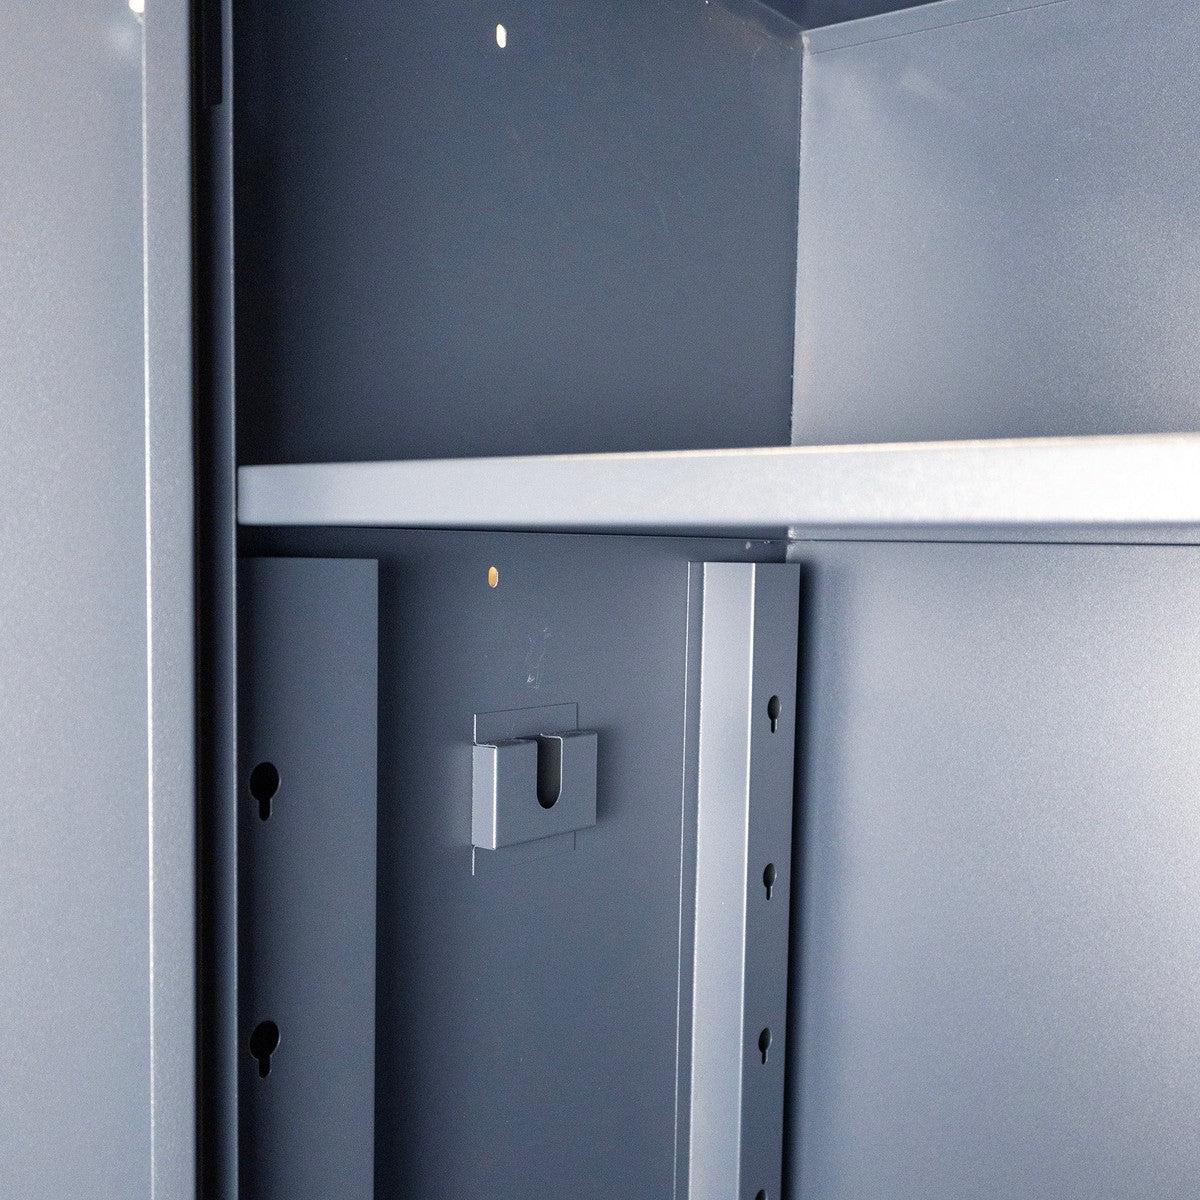 24" Tall Cabinet with Aluminum Handle, Dark Grey